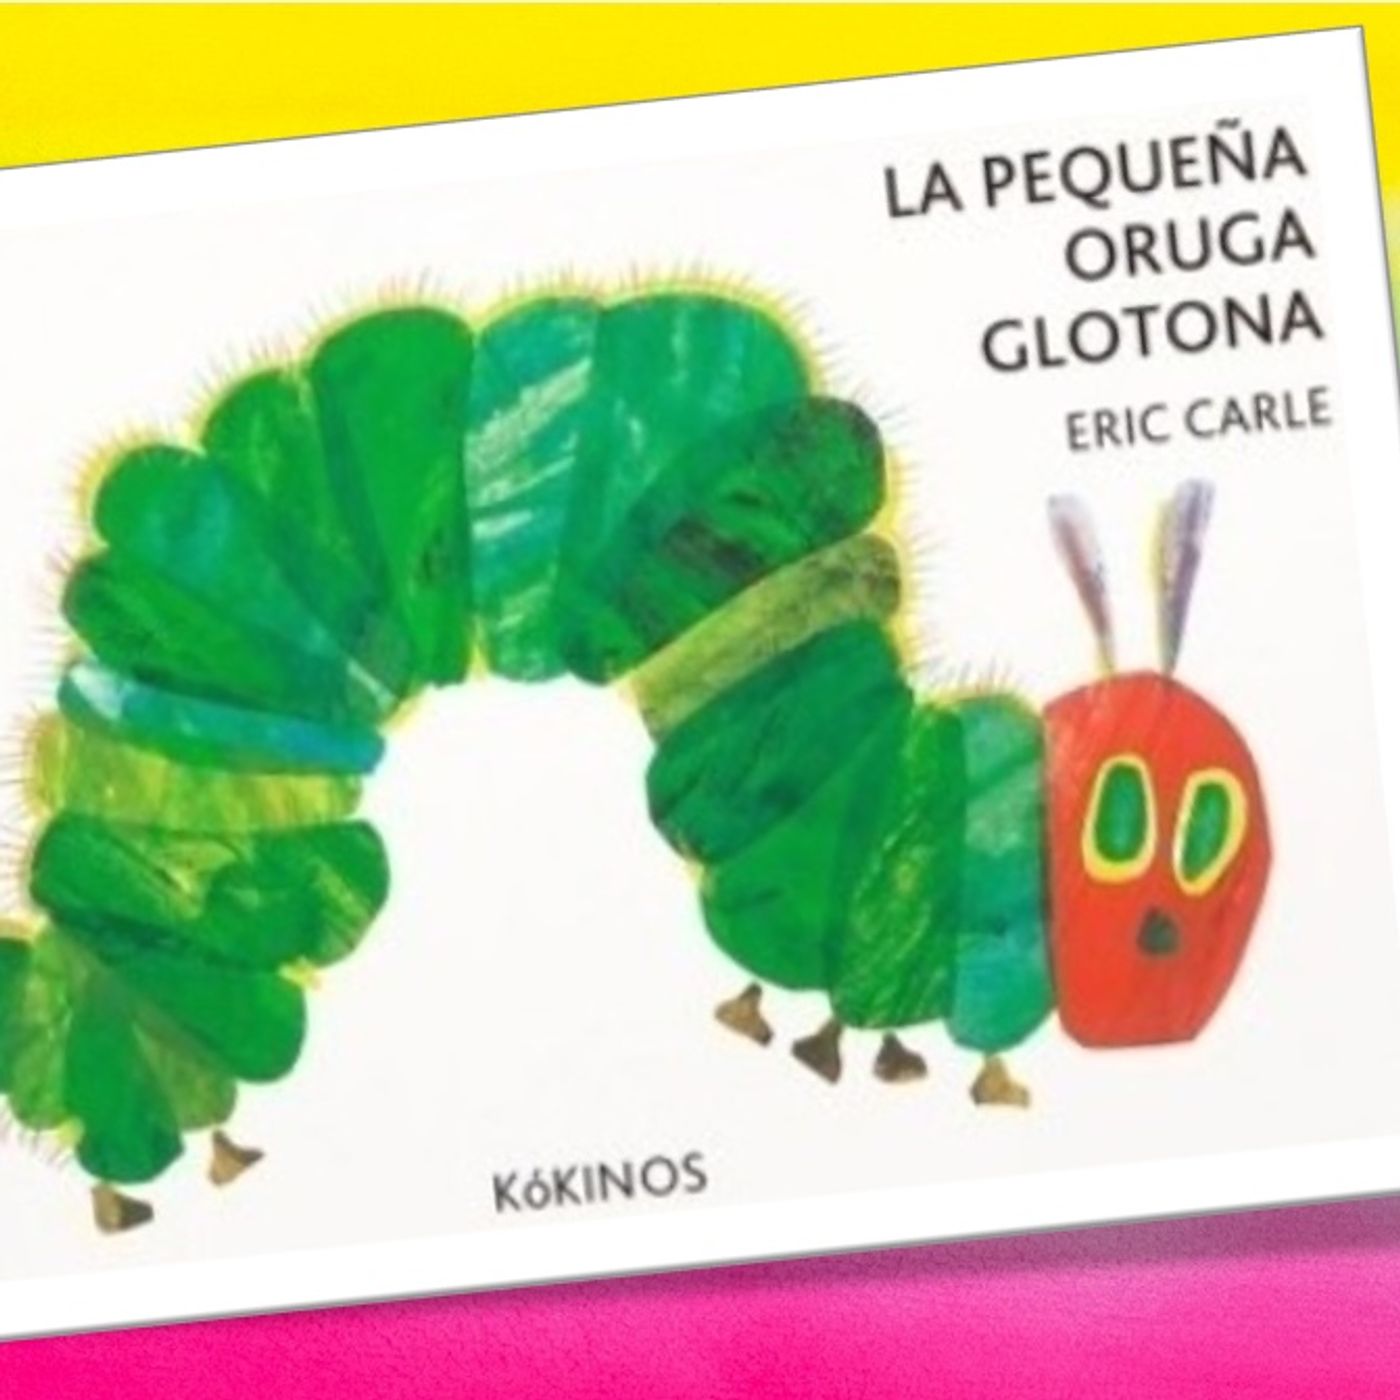 La pequeña oruga glotona, cuento infantil de Eric Carle